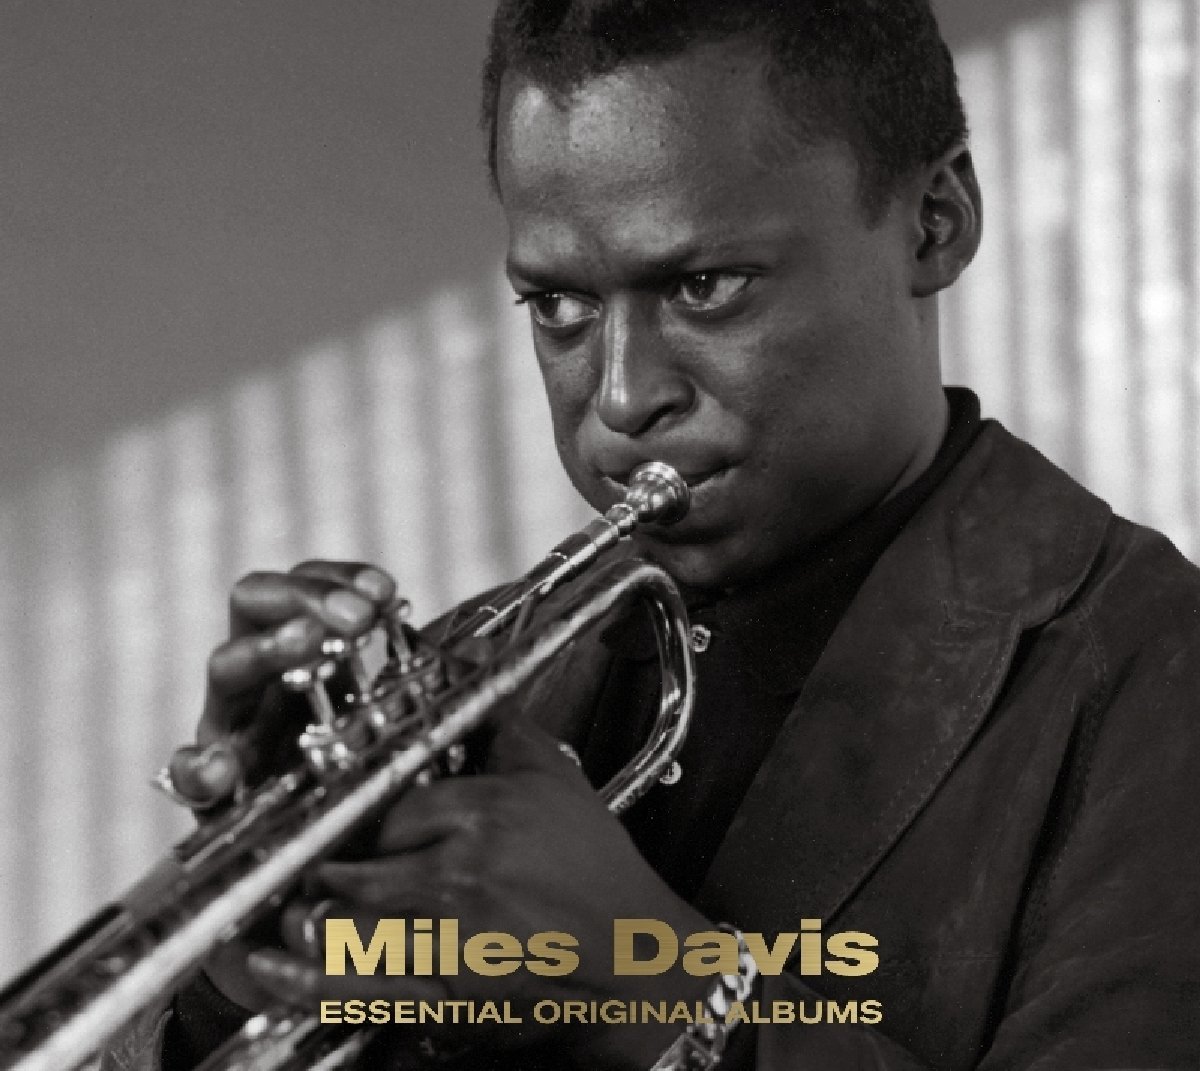 MILES DAVIS - Essential Original Albums cover 